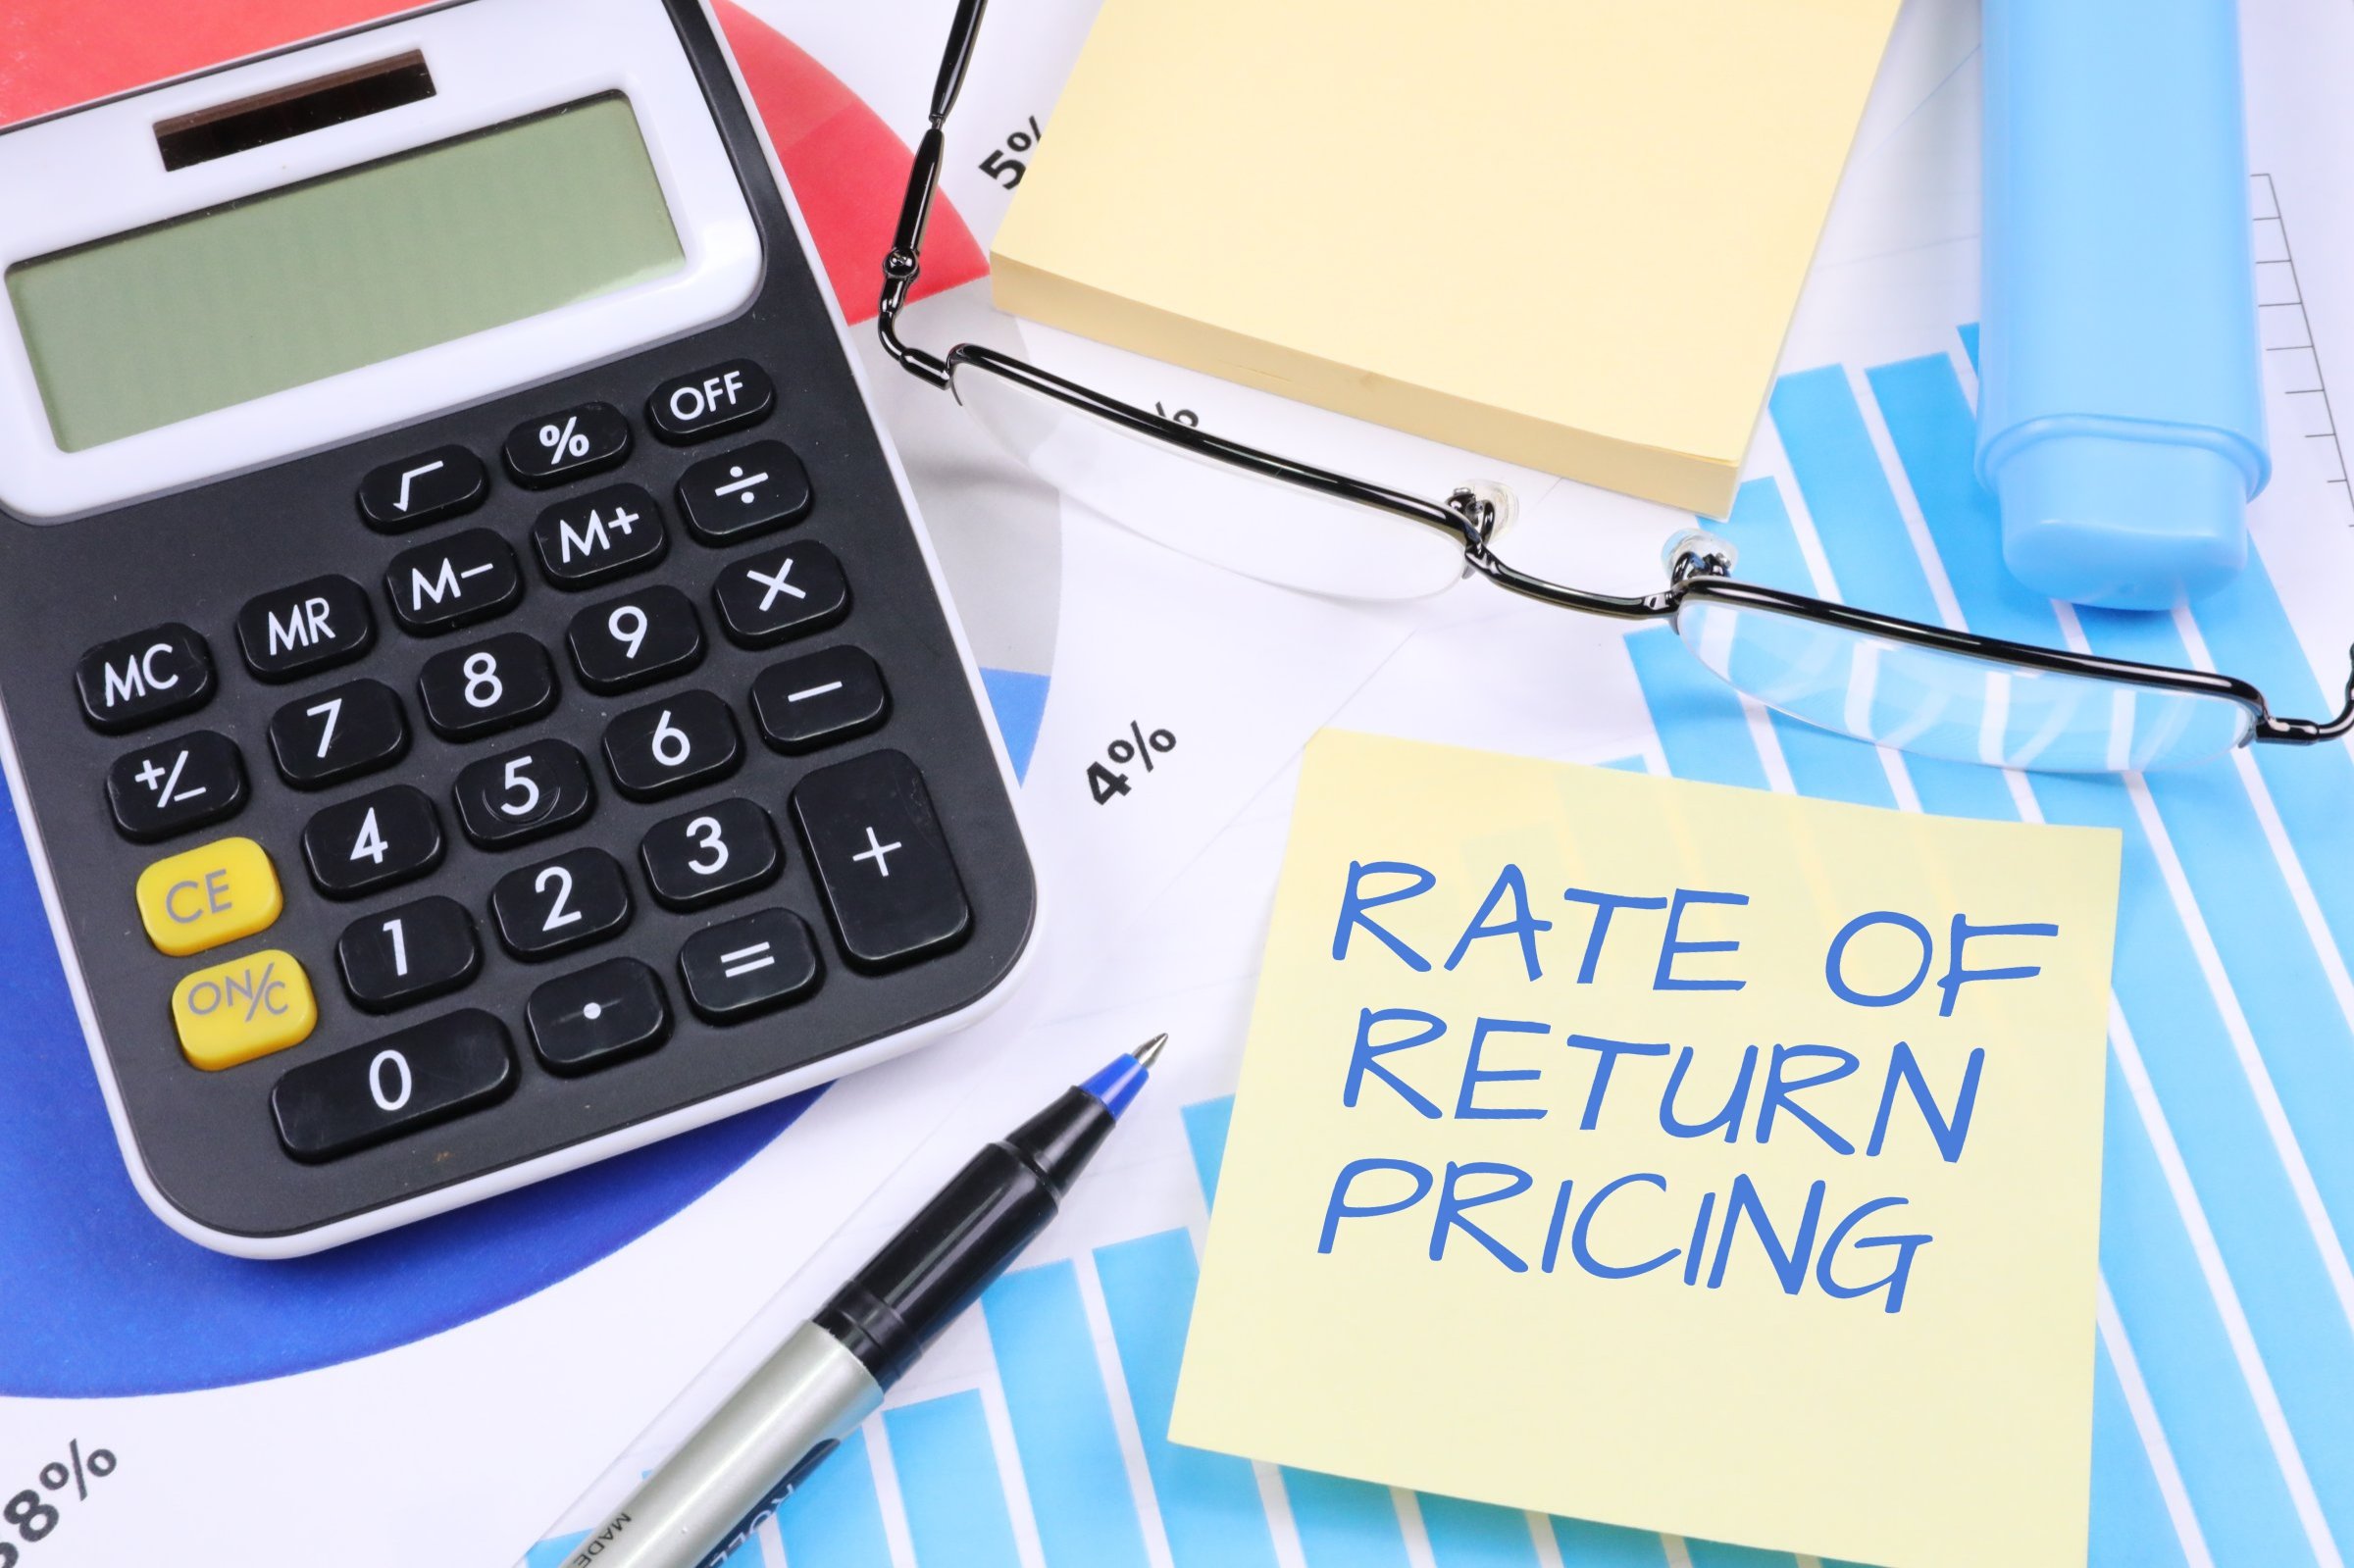 Rate of Return Pricing